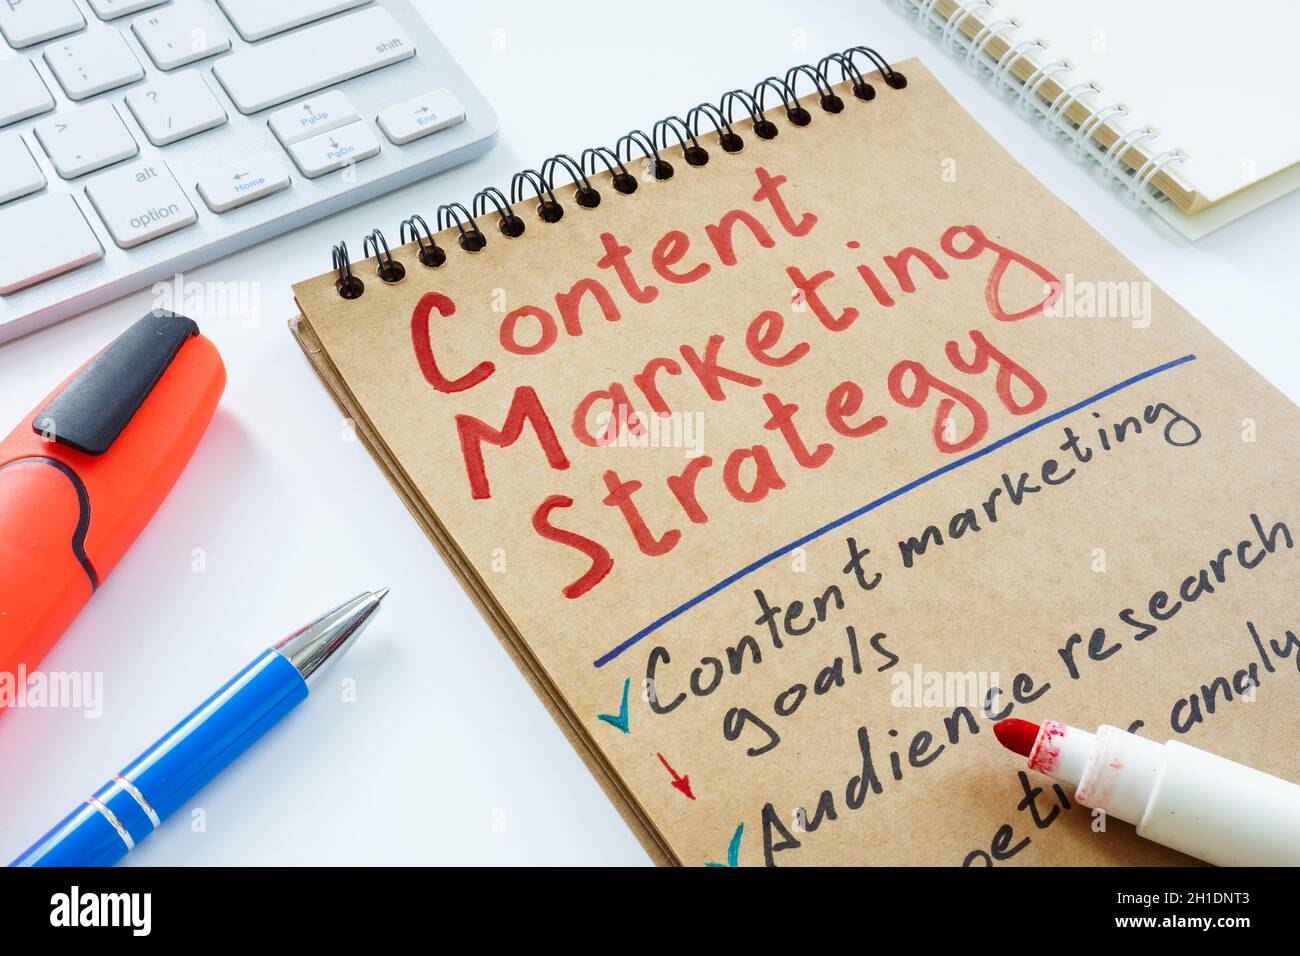 Handwritten Content marketing strategy and keyboard. Stock Photo